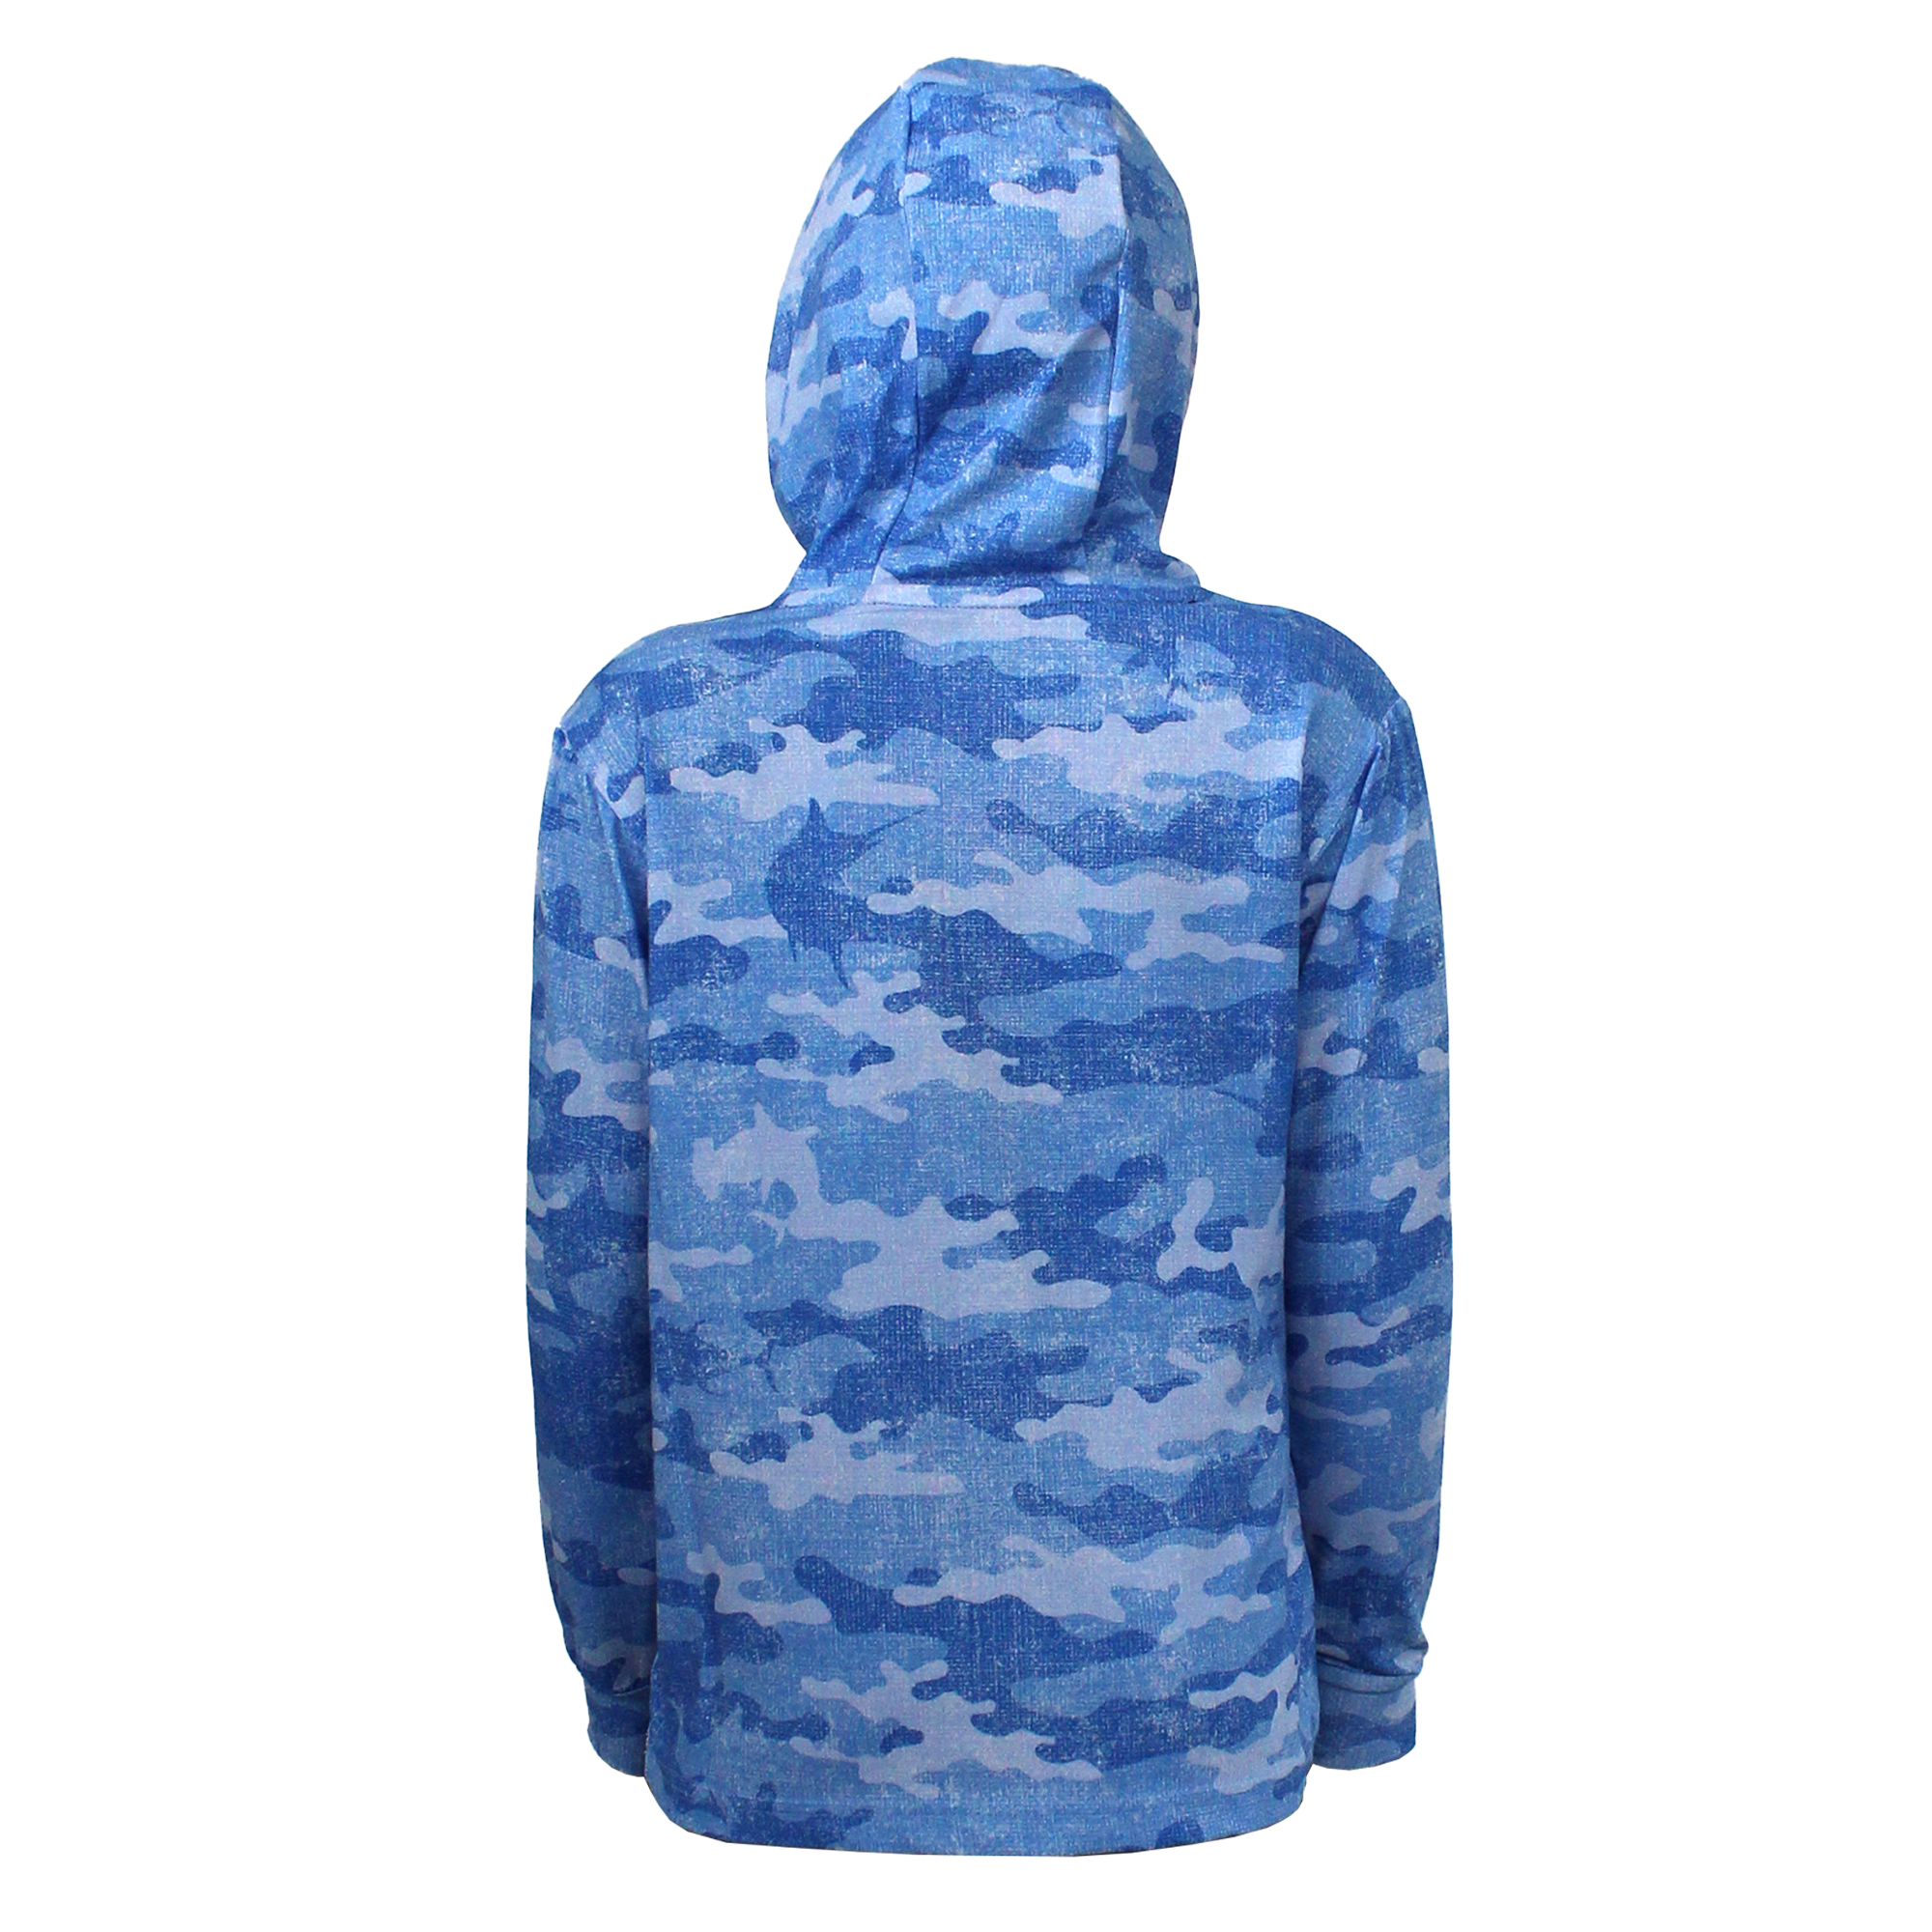 Atlan Junior Hooded Long Sleeve Fisherman Sailor Camo Patterned Blue UV Protected Shirt